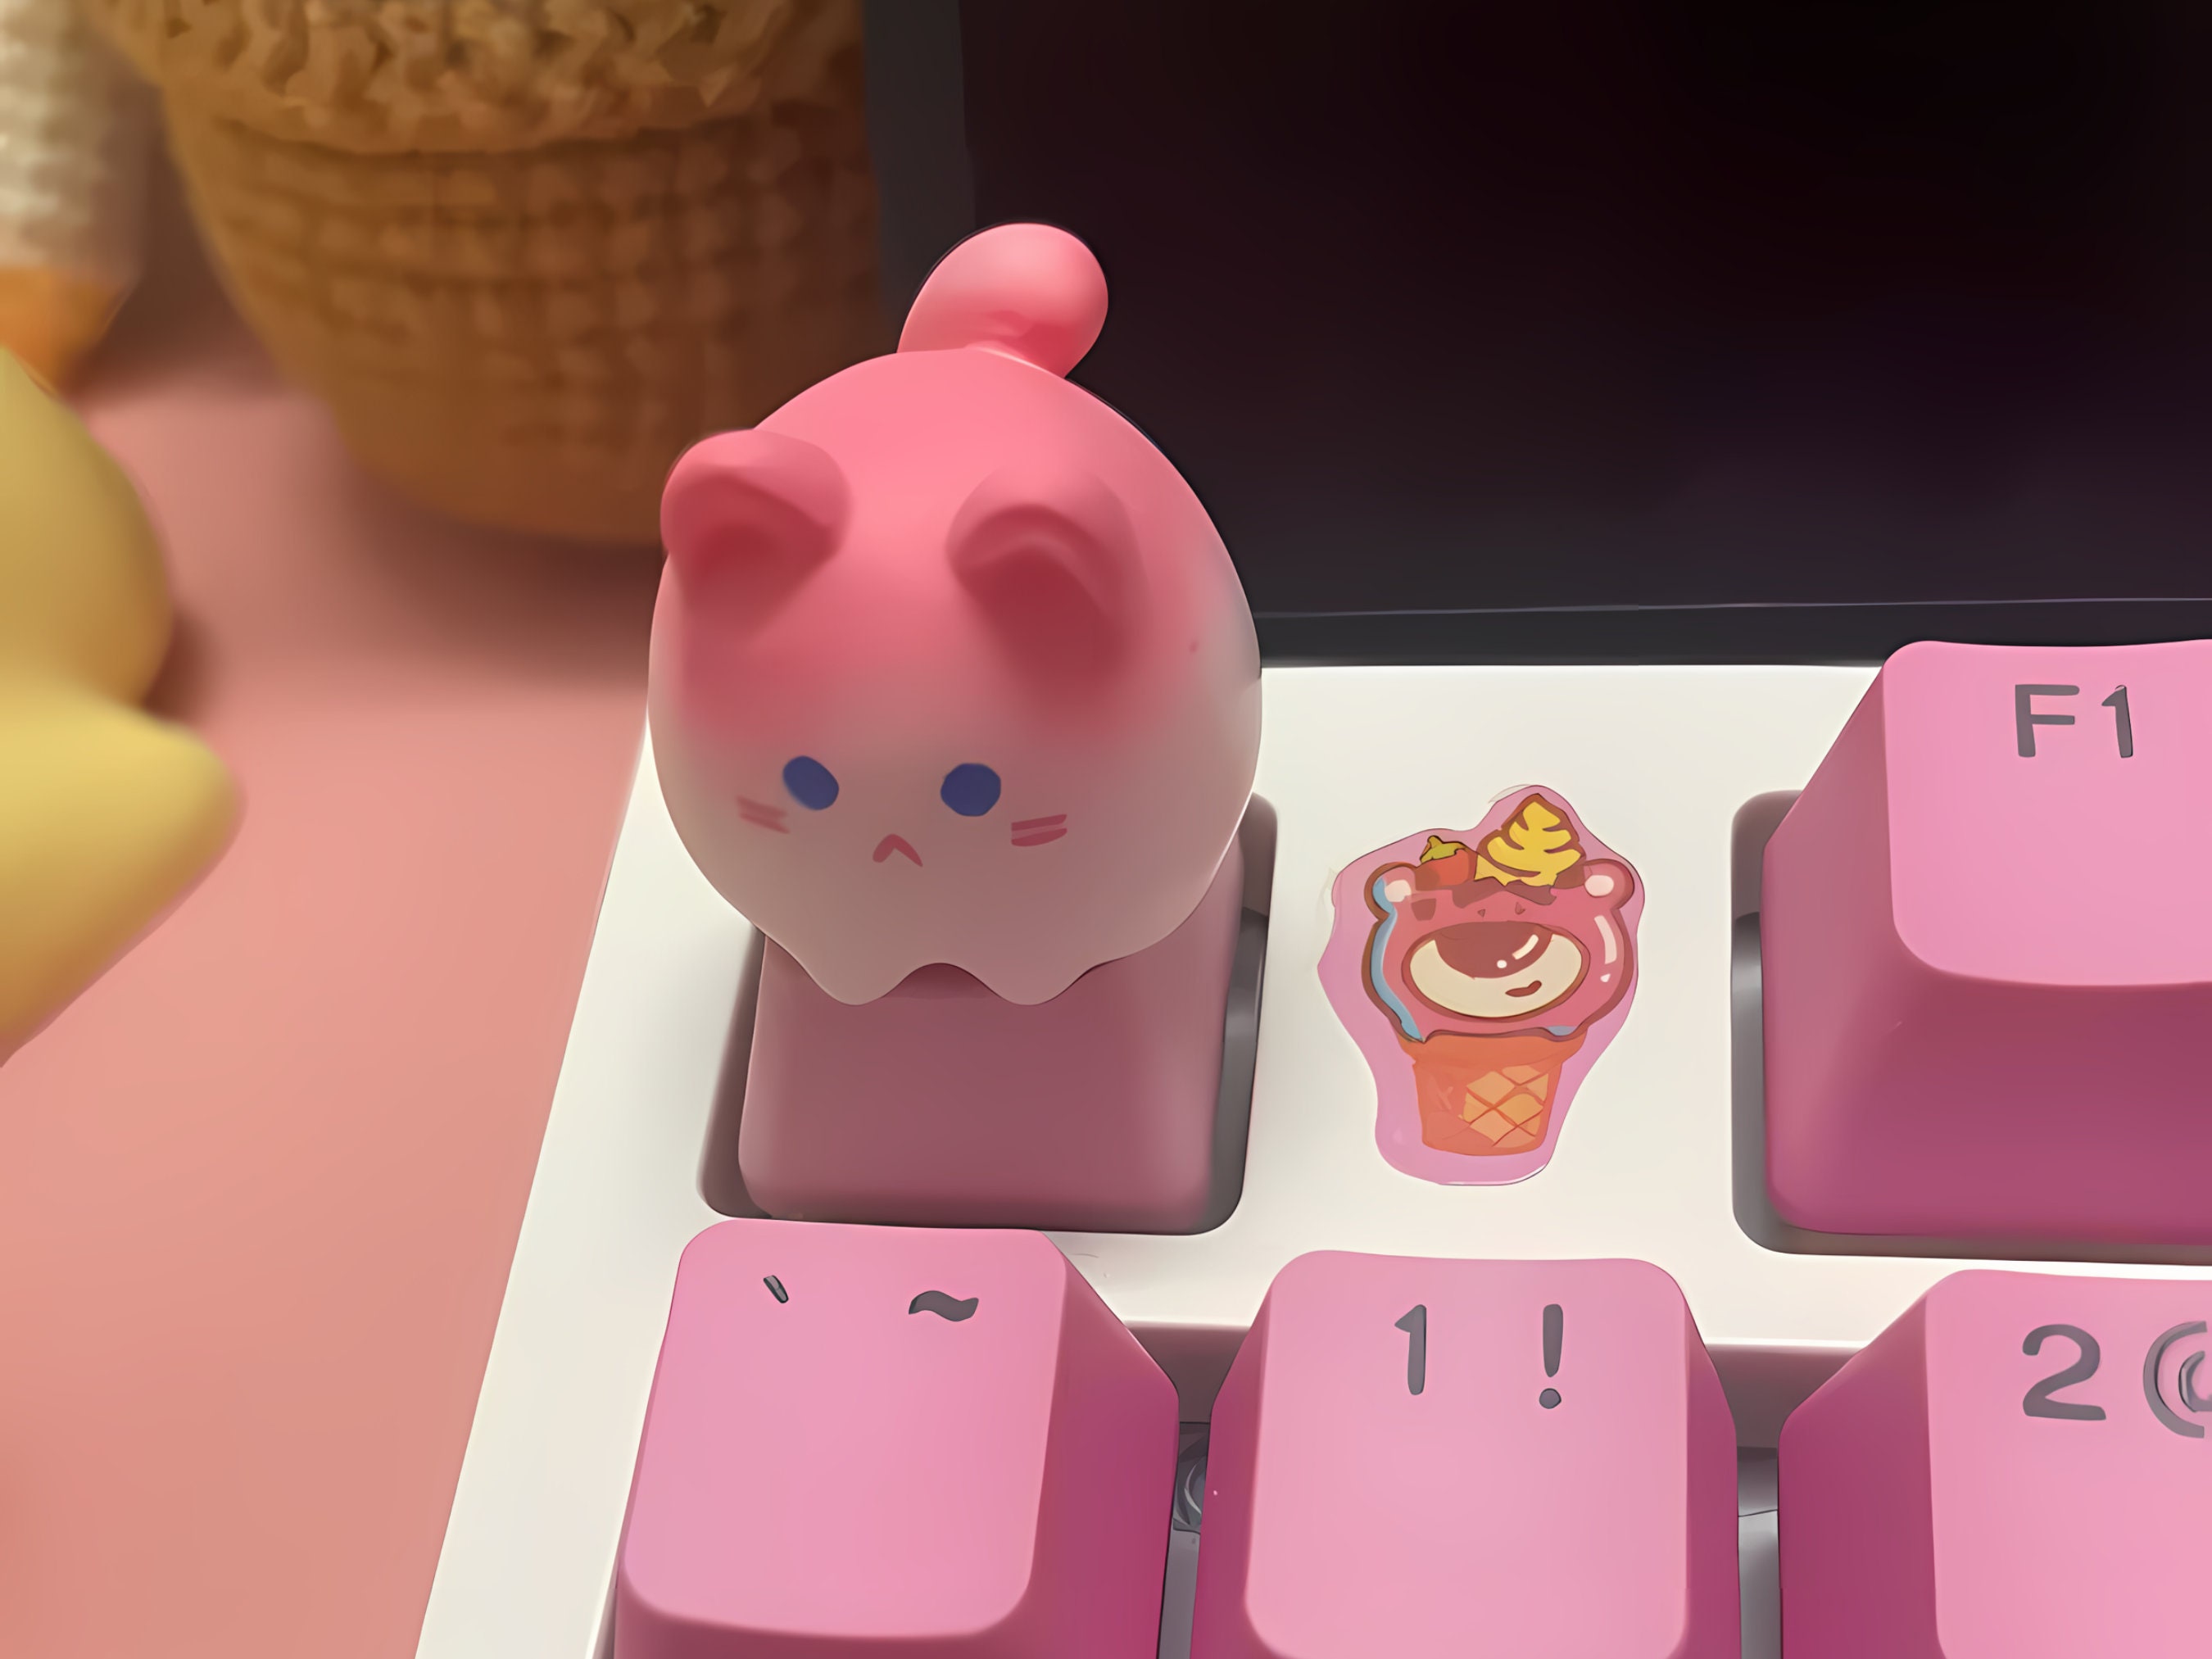 Cute Animals Keycap, Kawaii Keycap, Artisan Keycap, Keycap for MX Cherry Switches Mechanical Keyboard, Handmade Gift